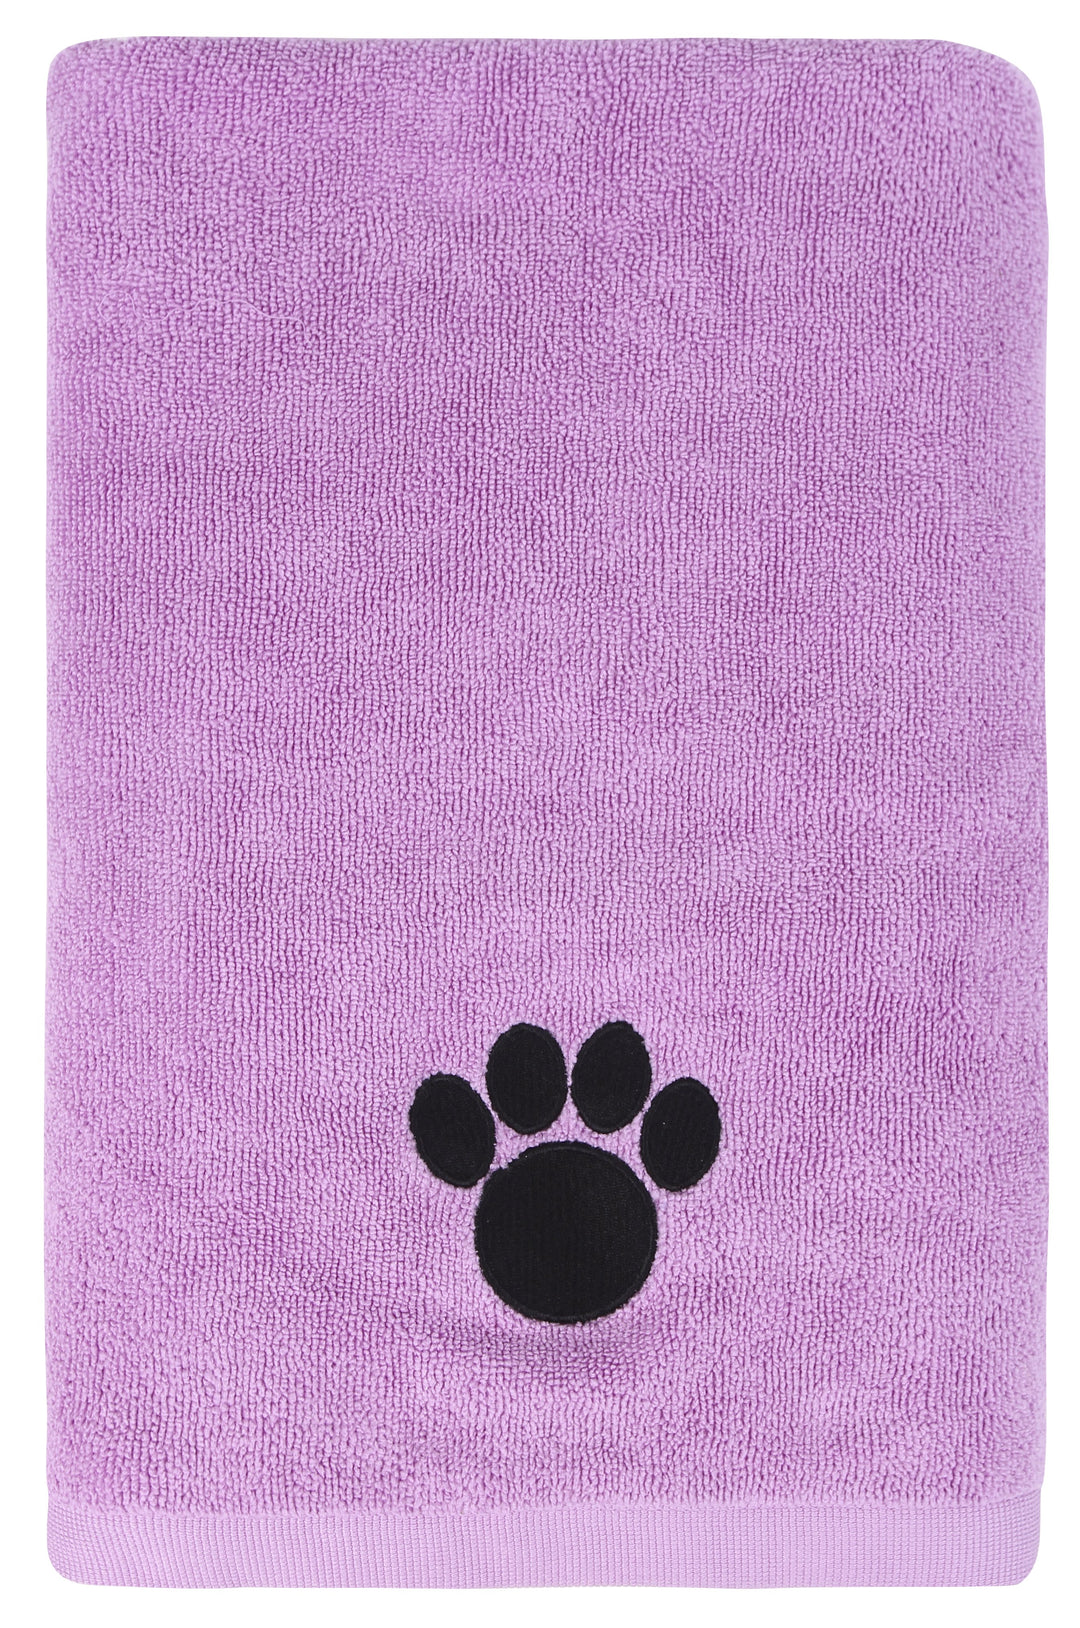 Microfiber Pet Towel, X-Large, 55 x 28 in, Violet